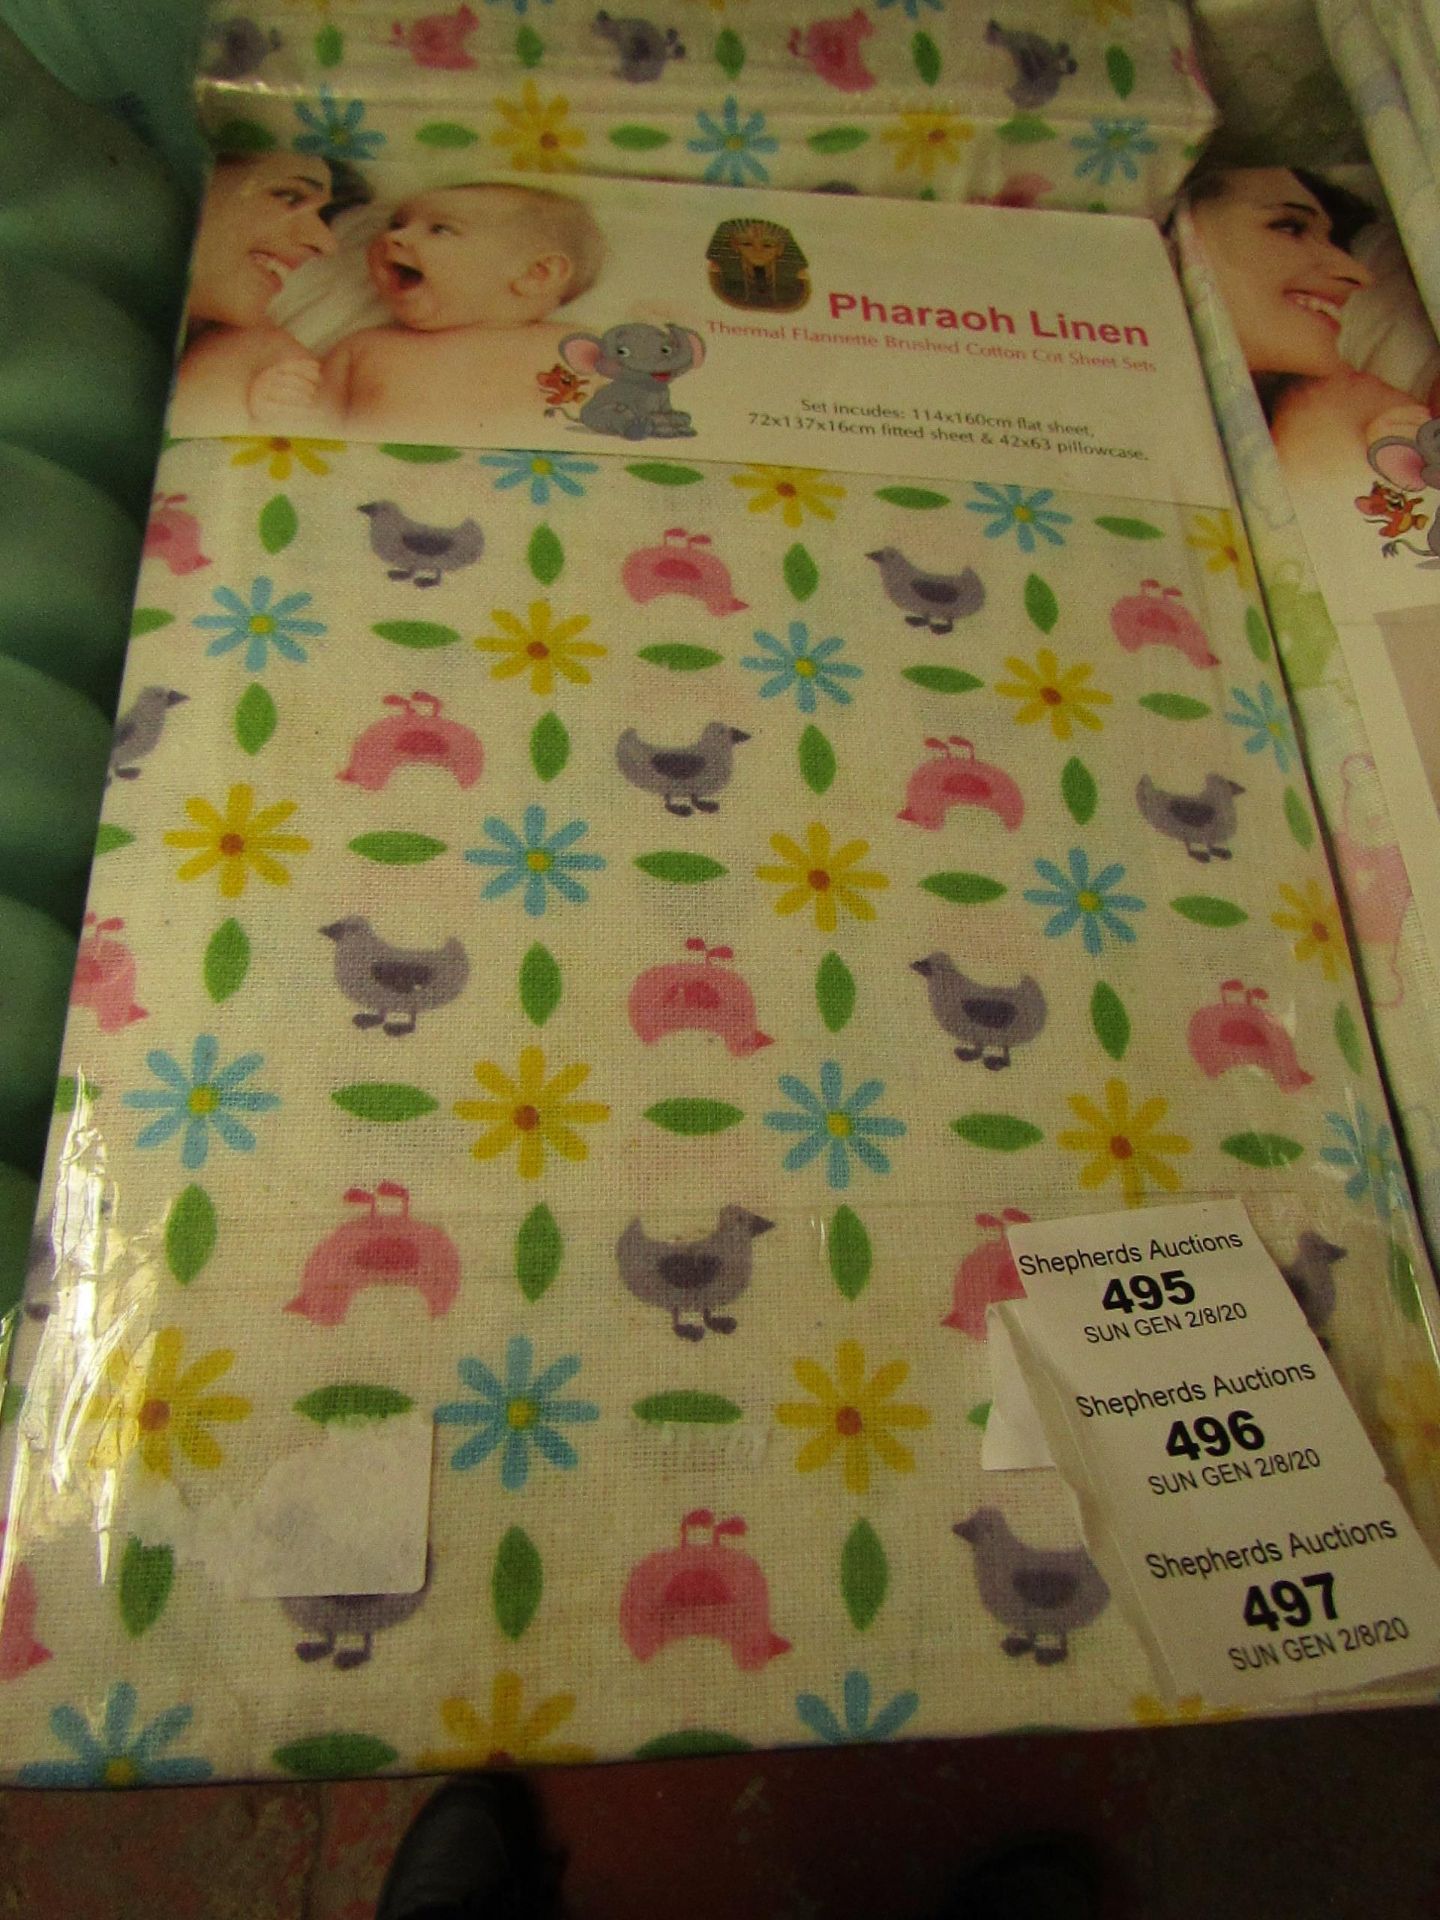 Pharaoh Linen - Brushed Cotton Sheet & PillowCase - New & Packaged.